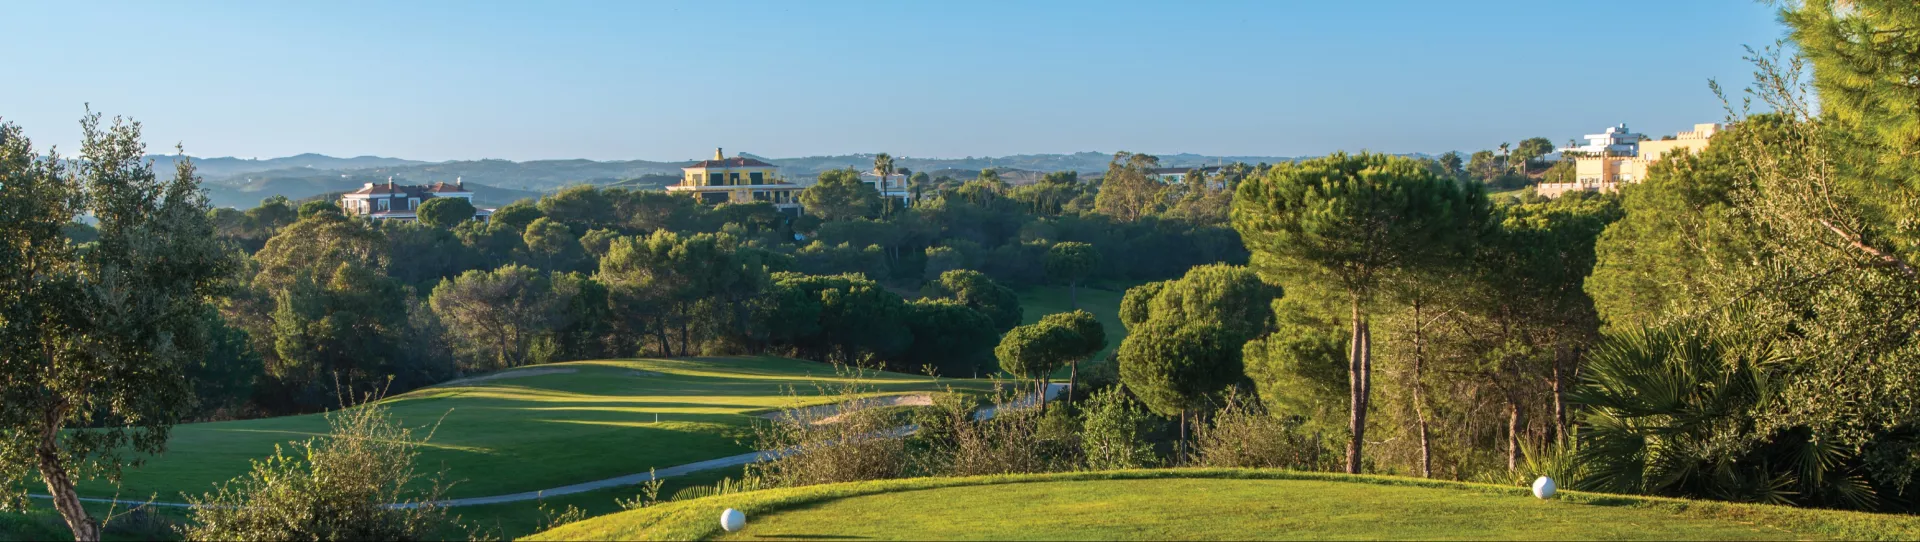 Portugal golf courses - Castro Marim Golf Course - Photo 1